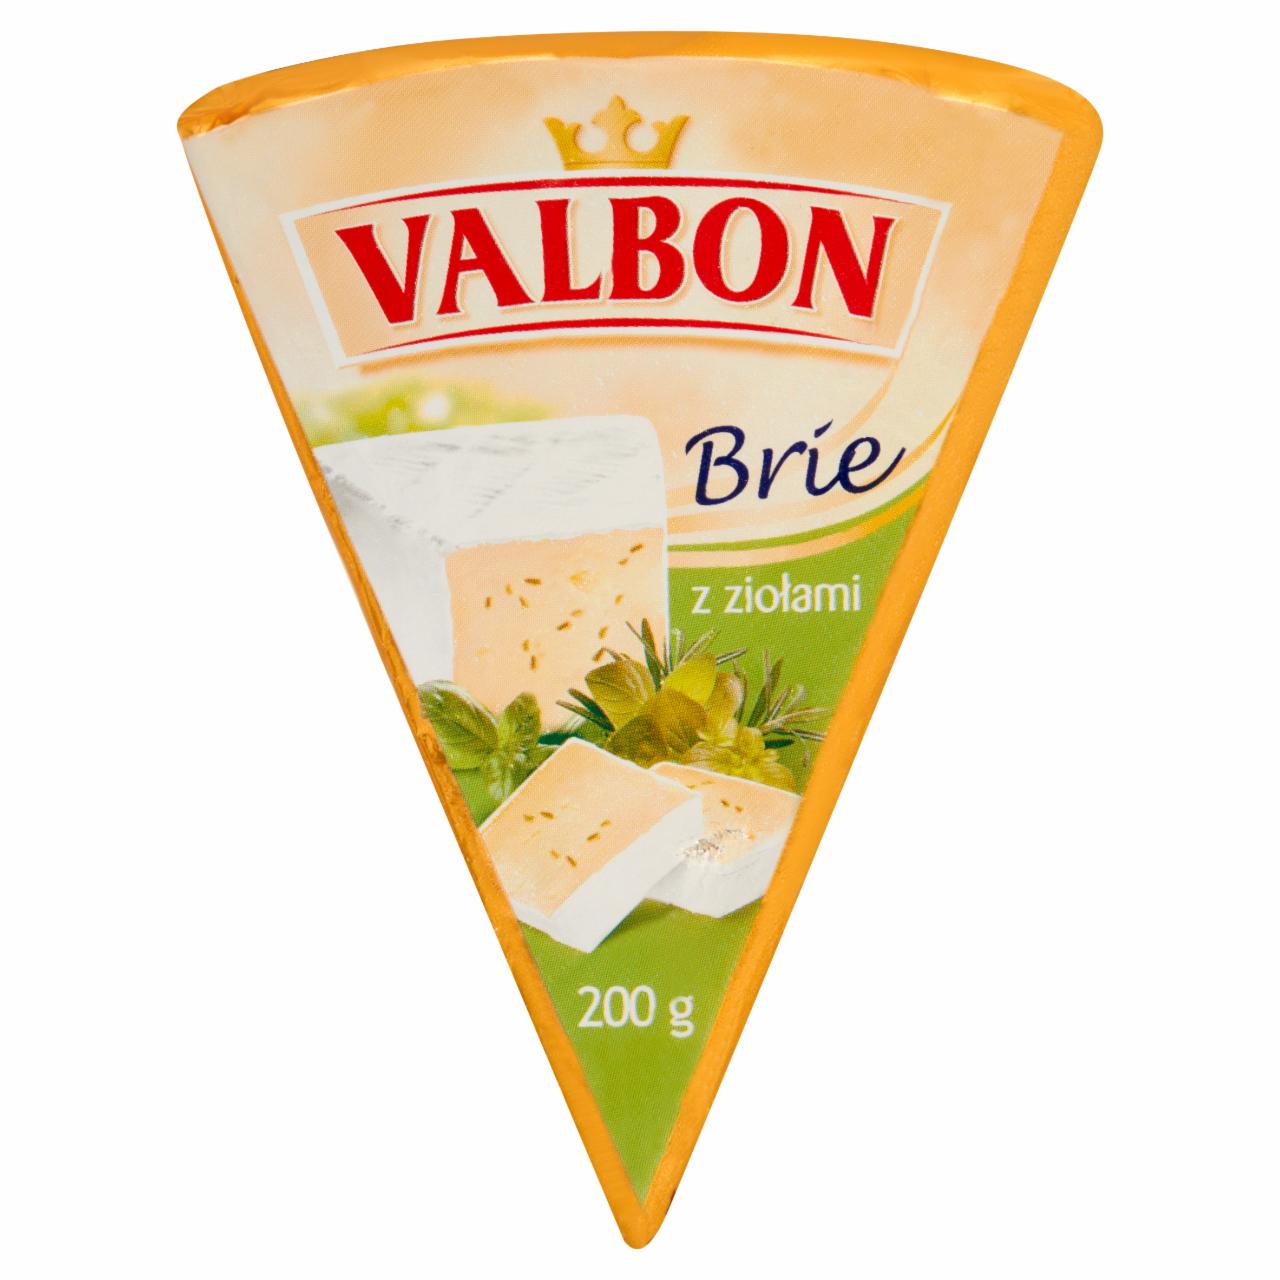 Zdjęcia - Valbon Brie z ziołami 200 g